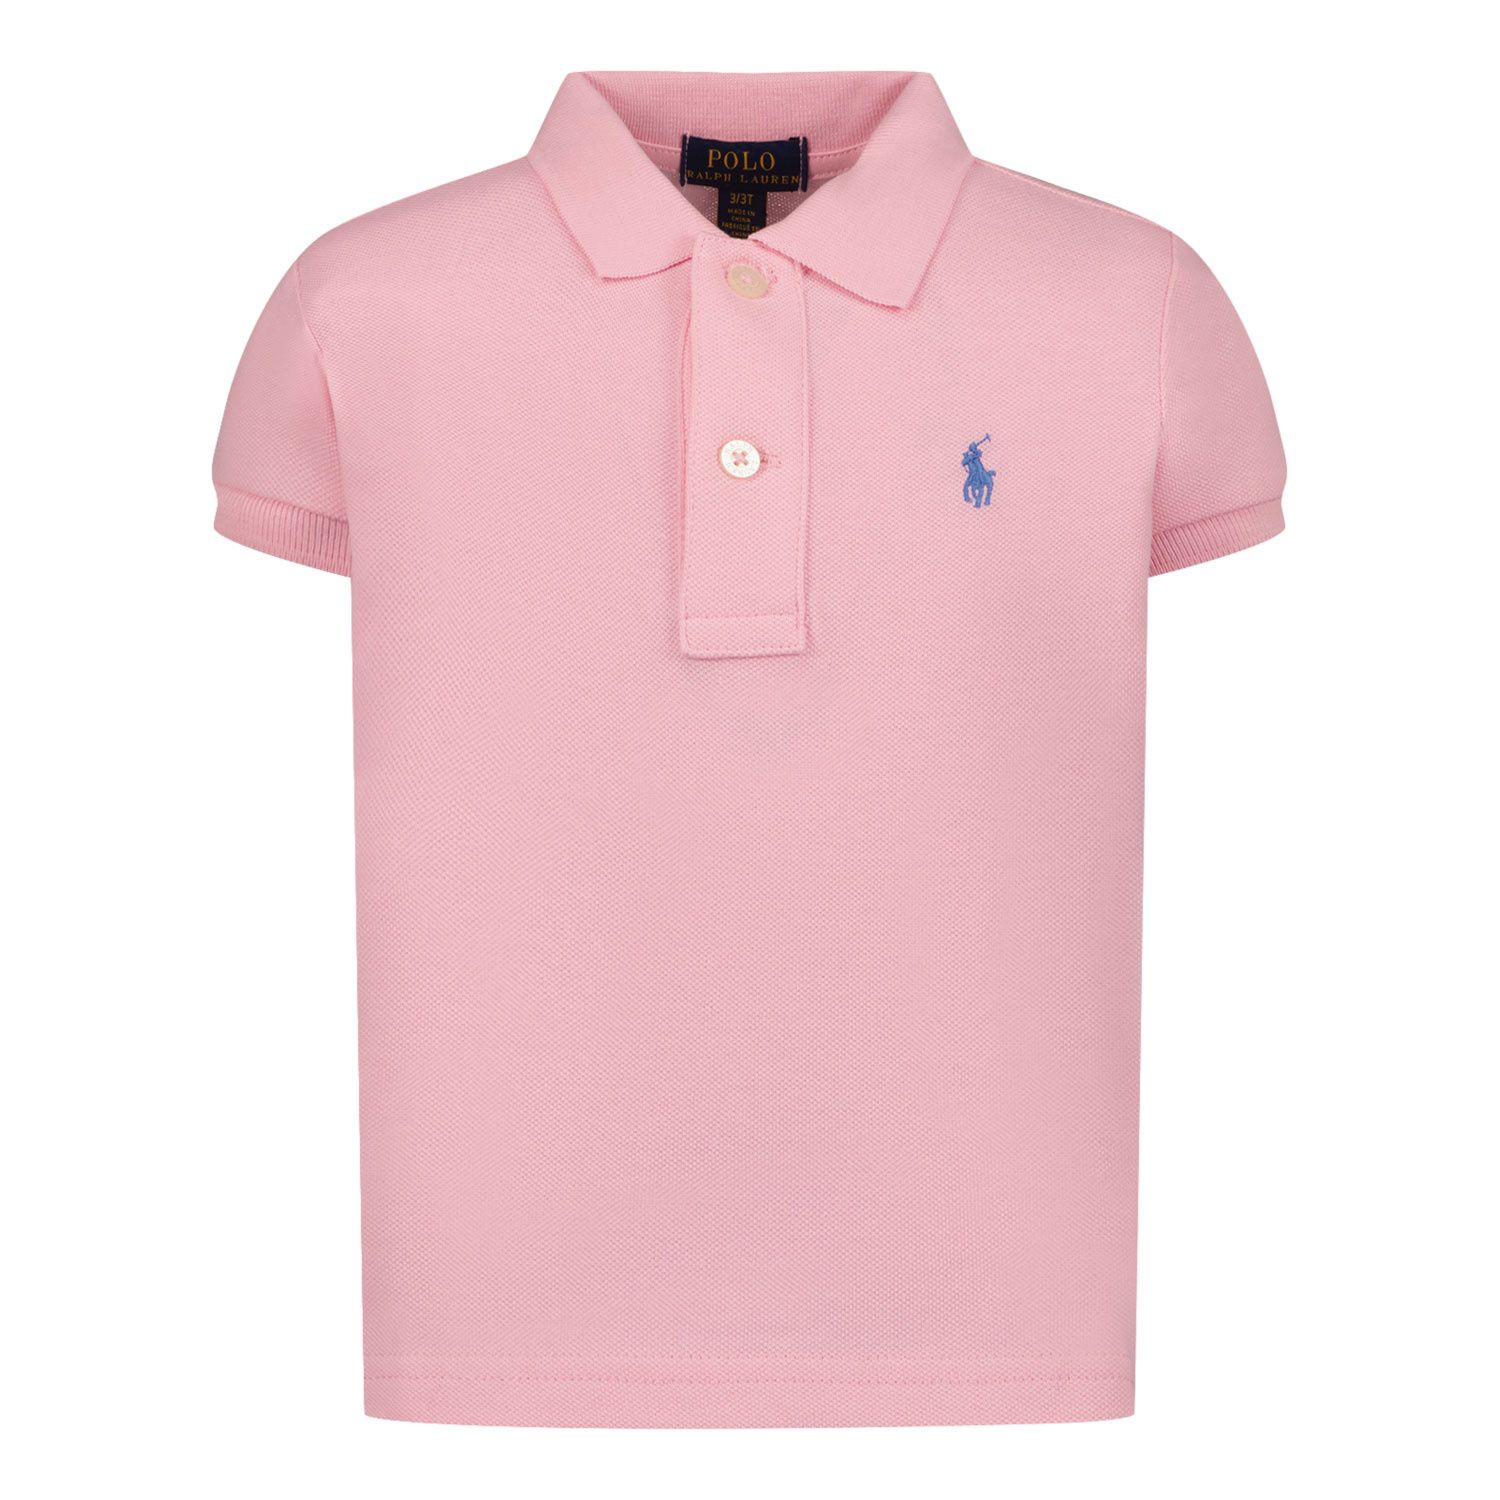 Picture of Ralph Lauren 811484 kids polo shirt pink